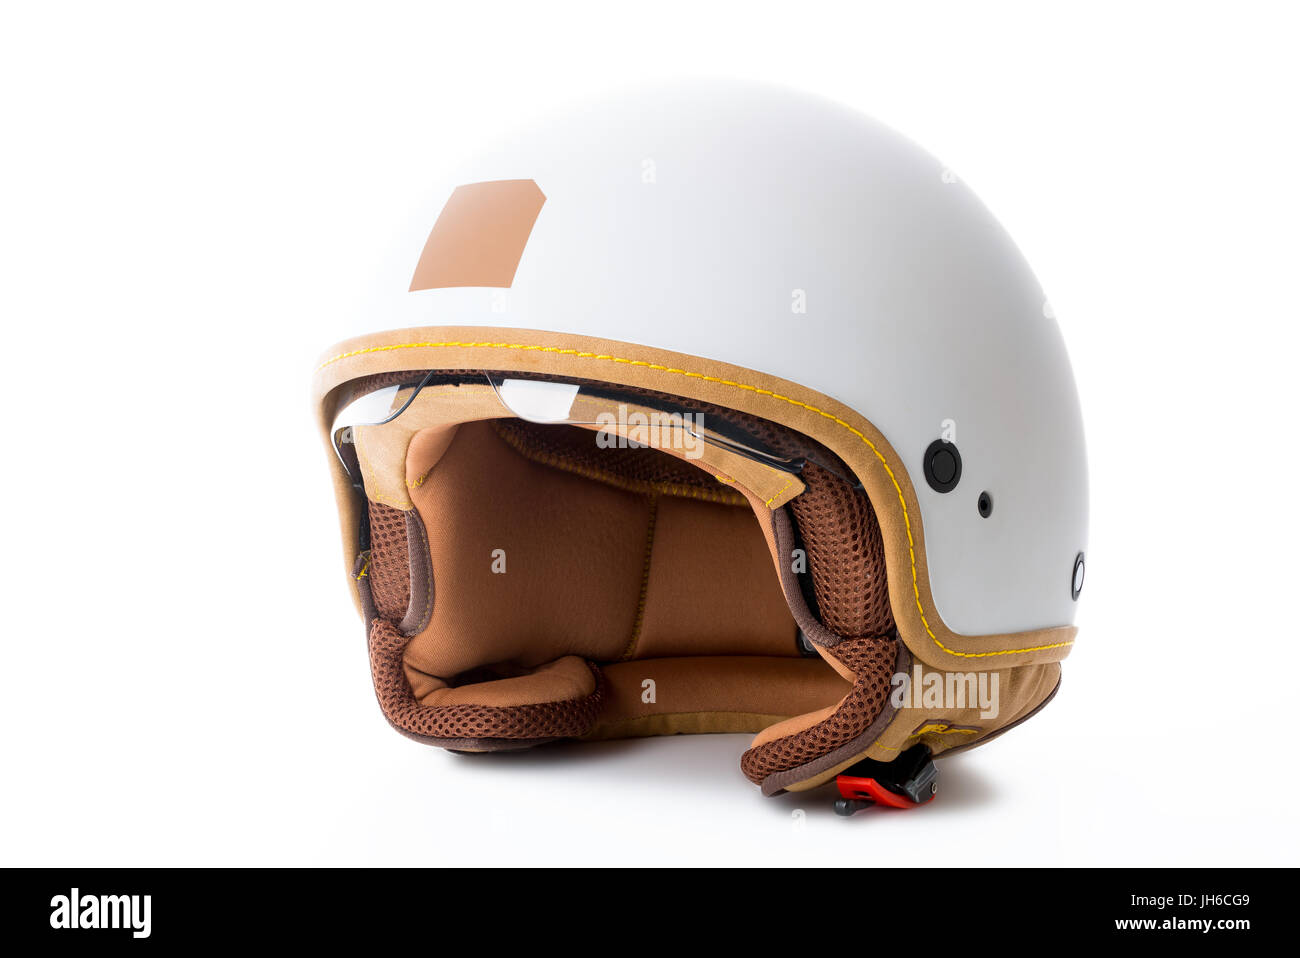 motorcycle helmet isolated on white background Stock Photo